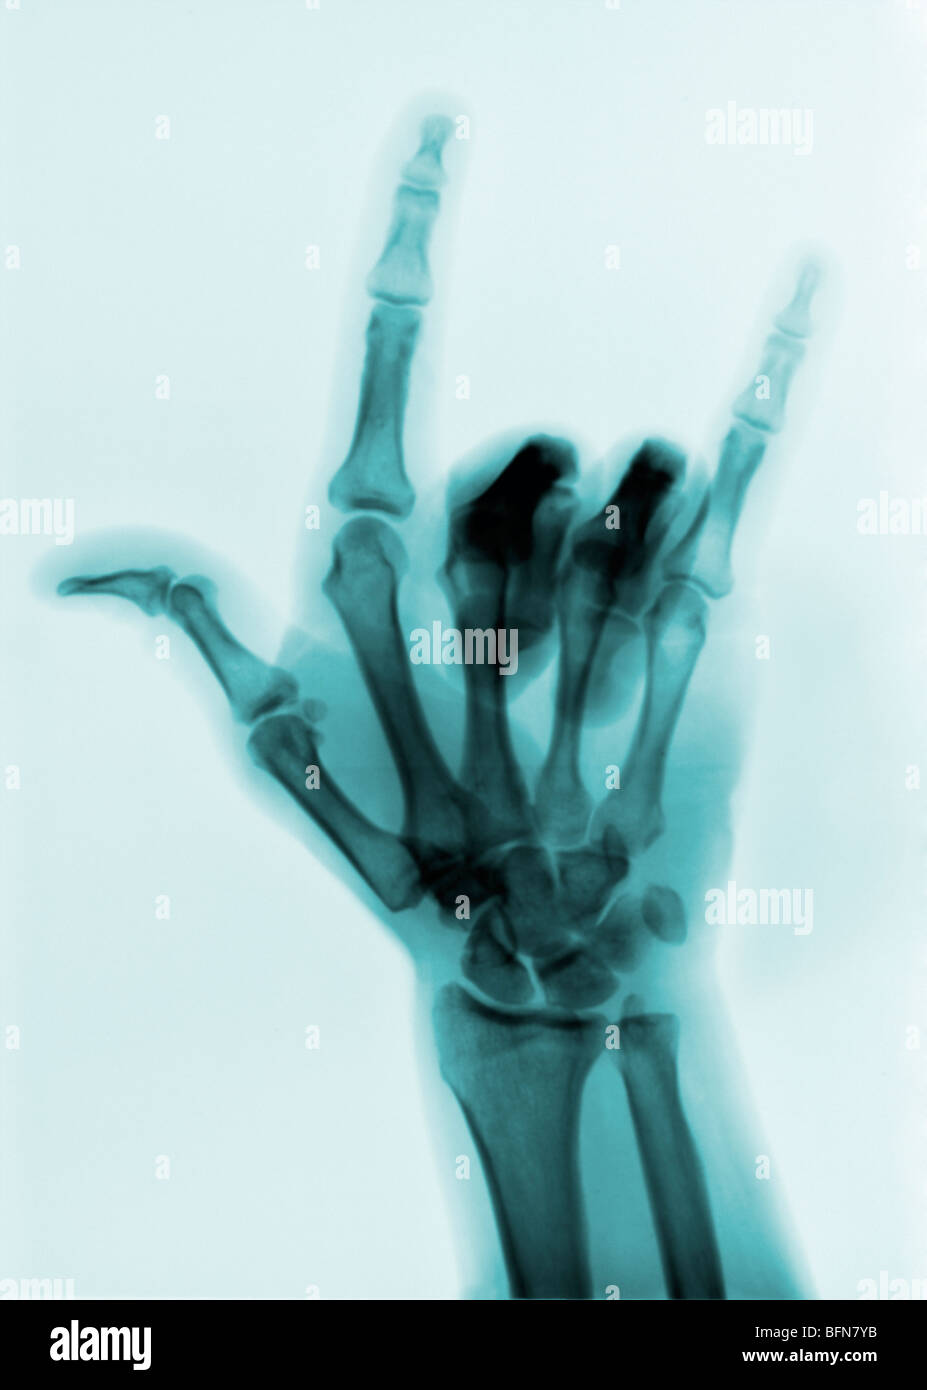 X-ray shoing linguaggio gestuale per "ti amo" Foto Stock